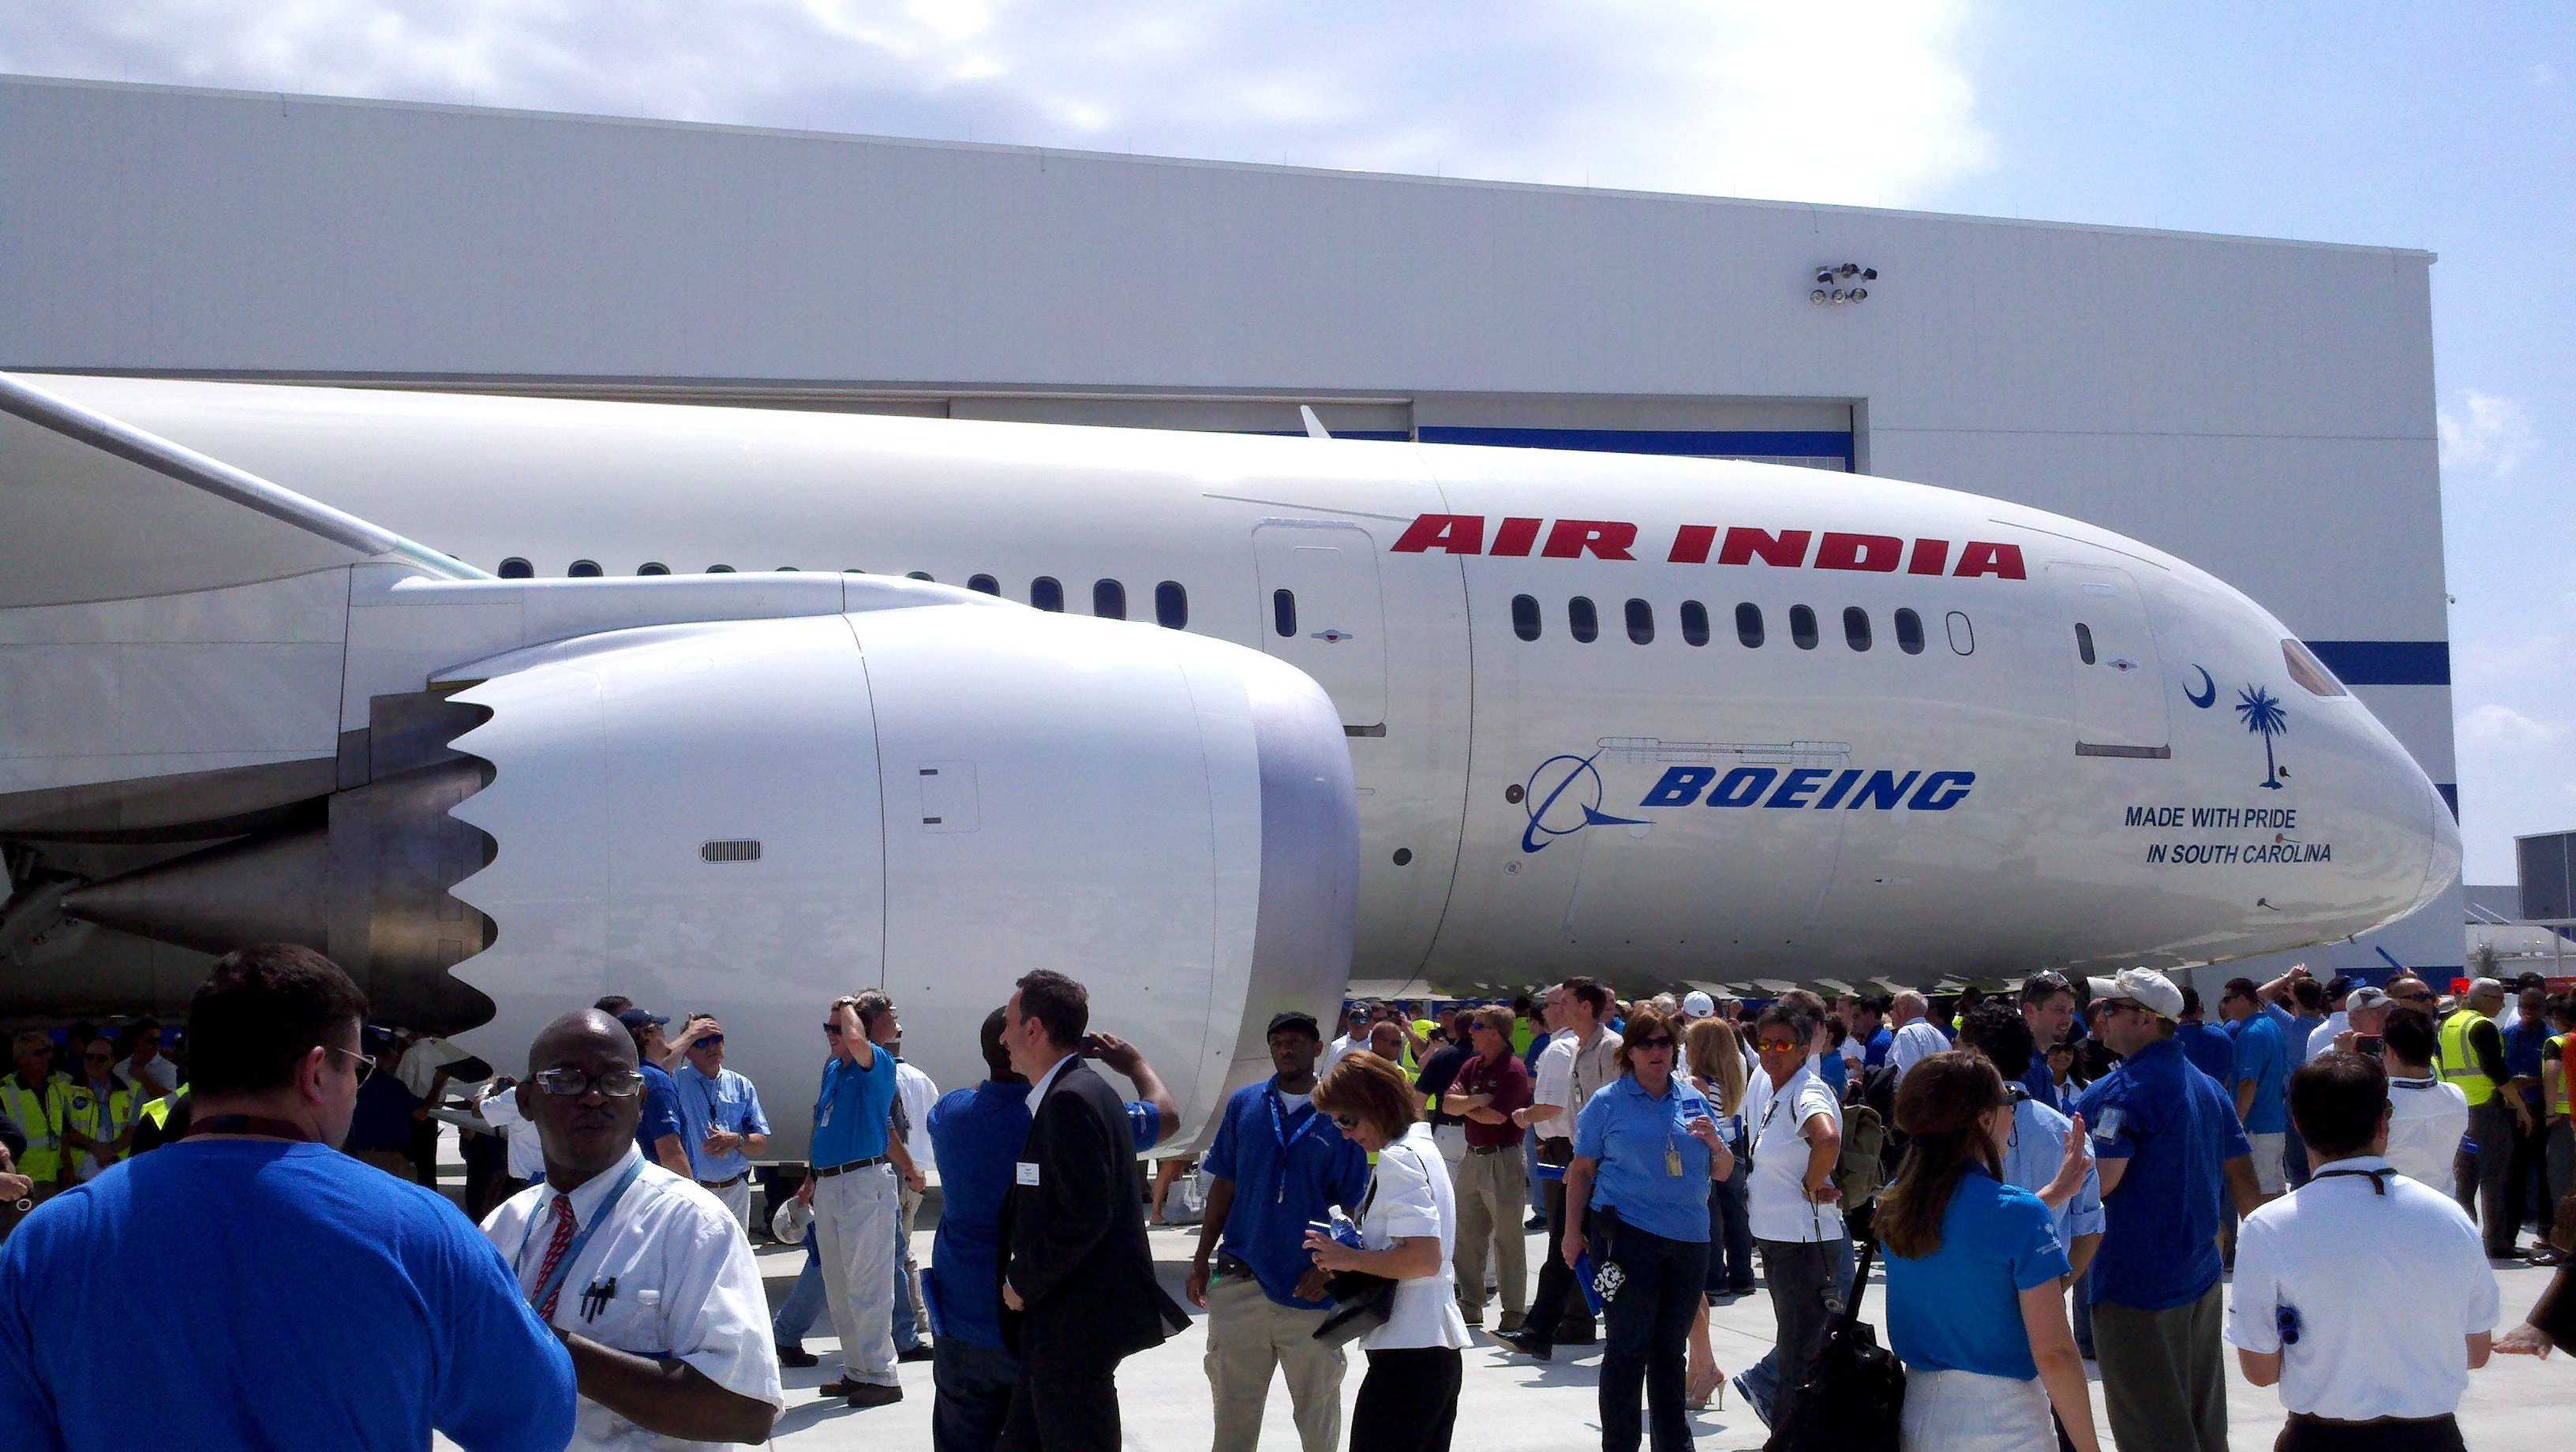 North Charleston-made Boeing 787